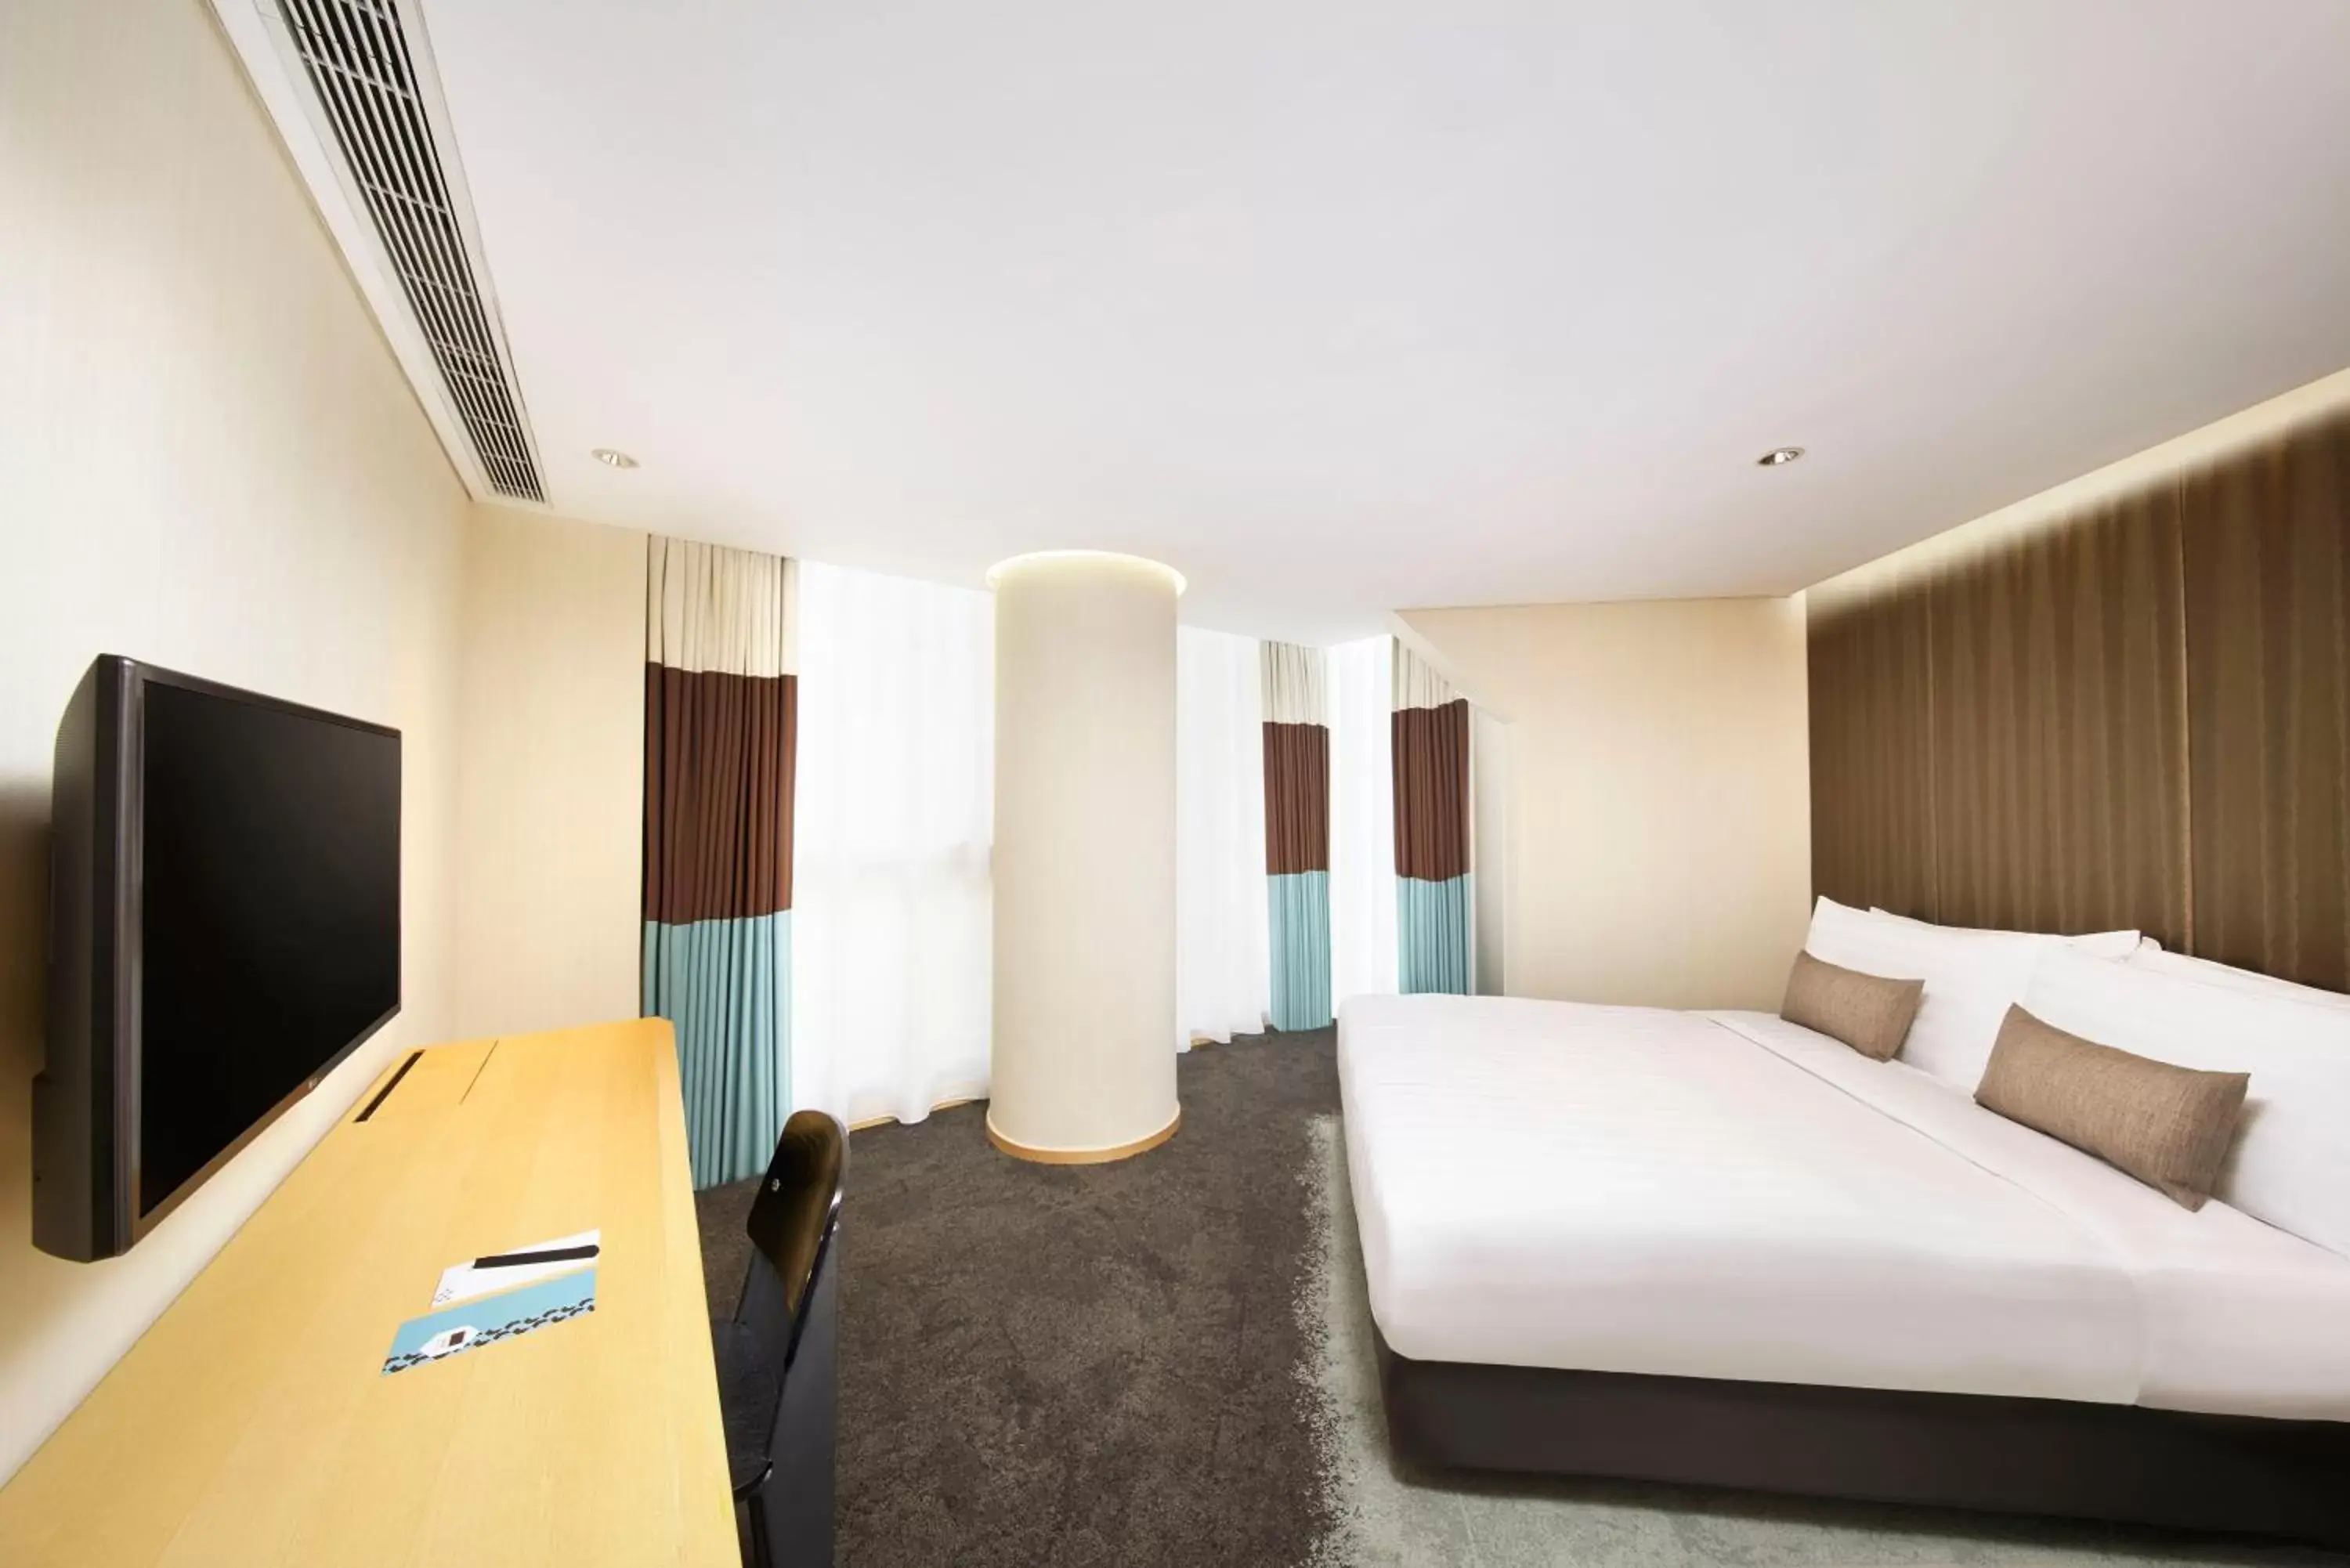 Bedroom in Hotel 108, Hong Kong